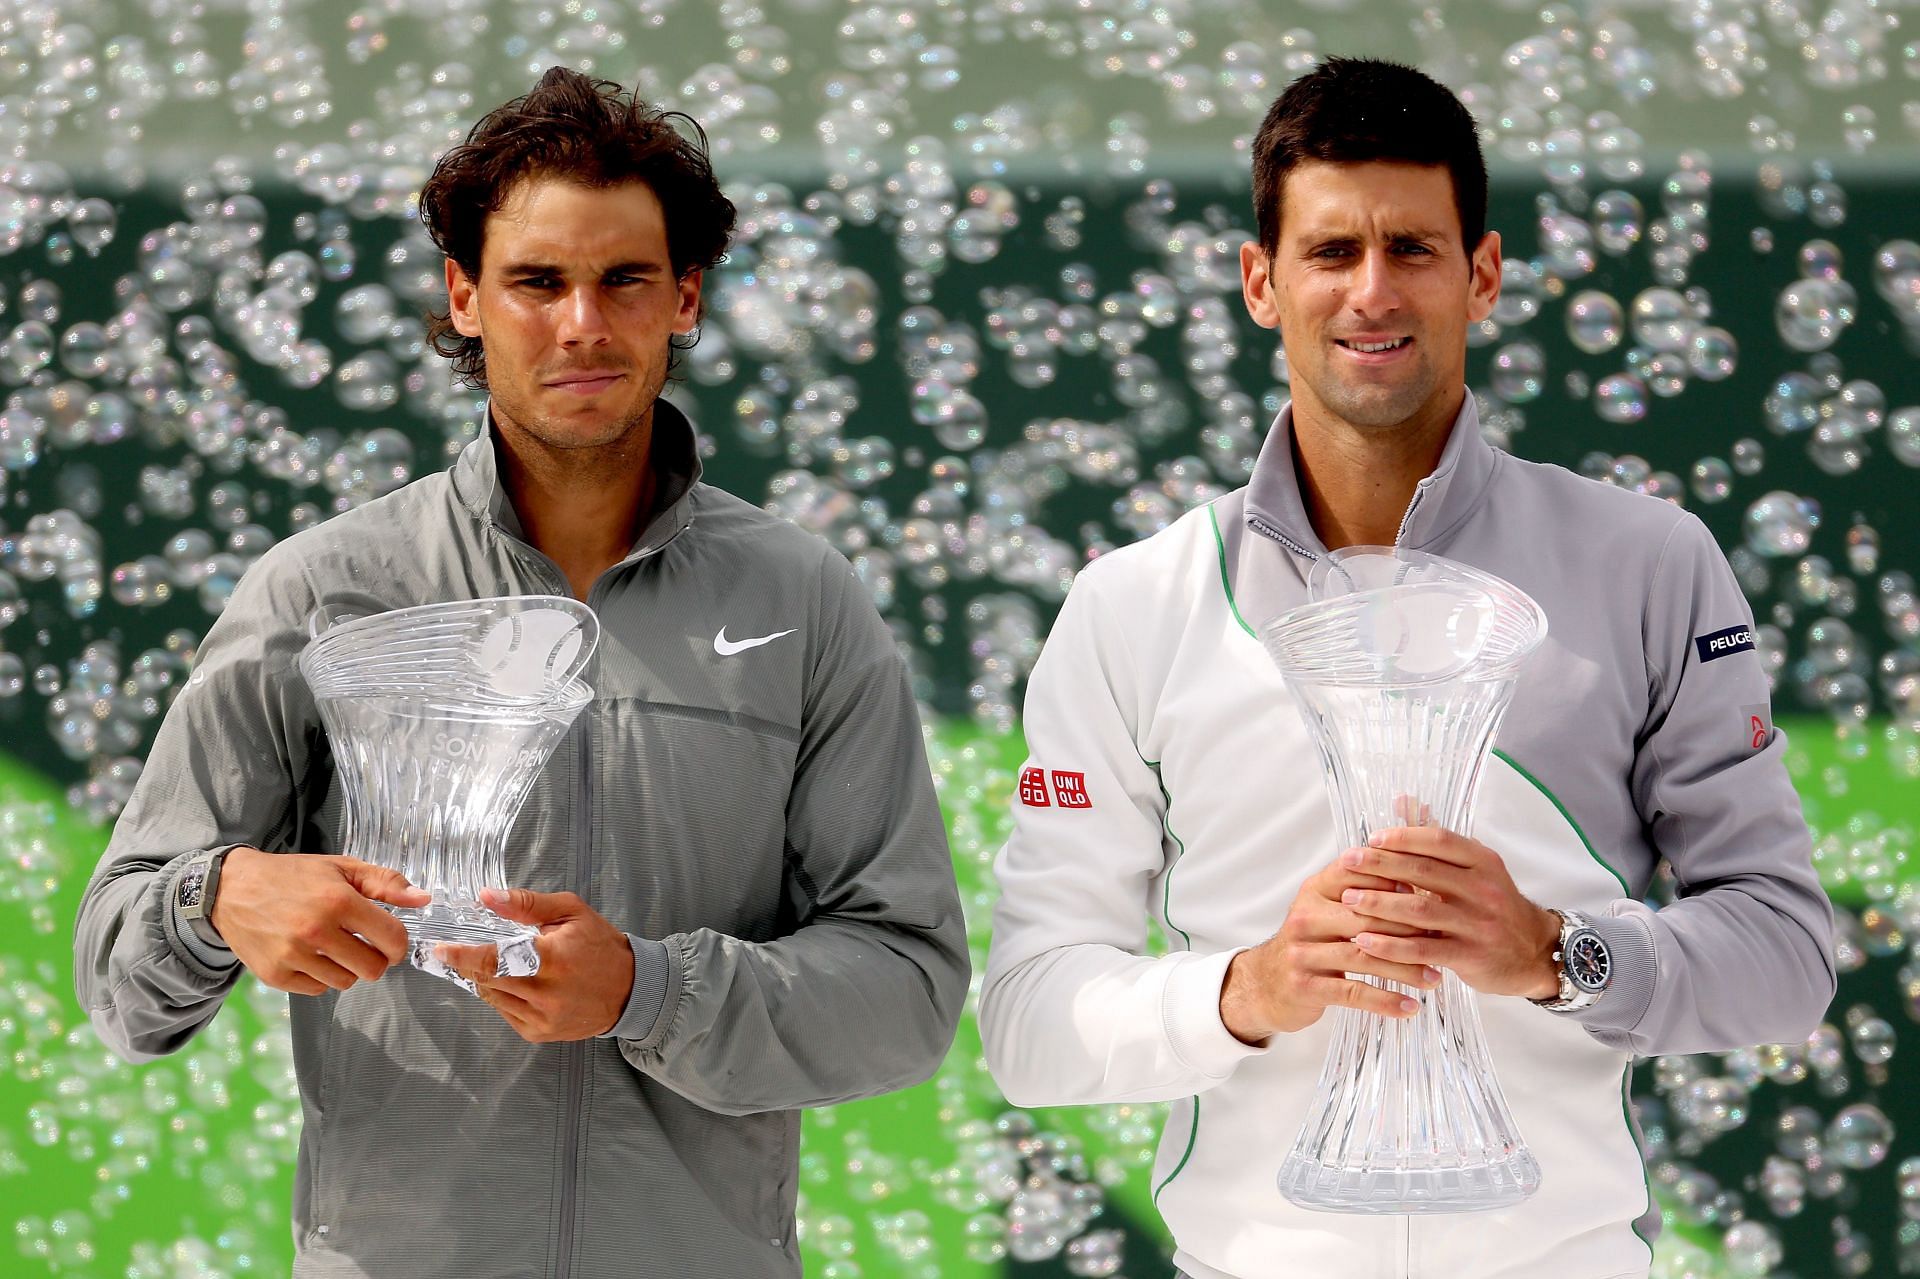 Rafael Nadal and Novak Djokovic at the Sony Open